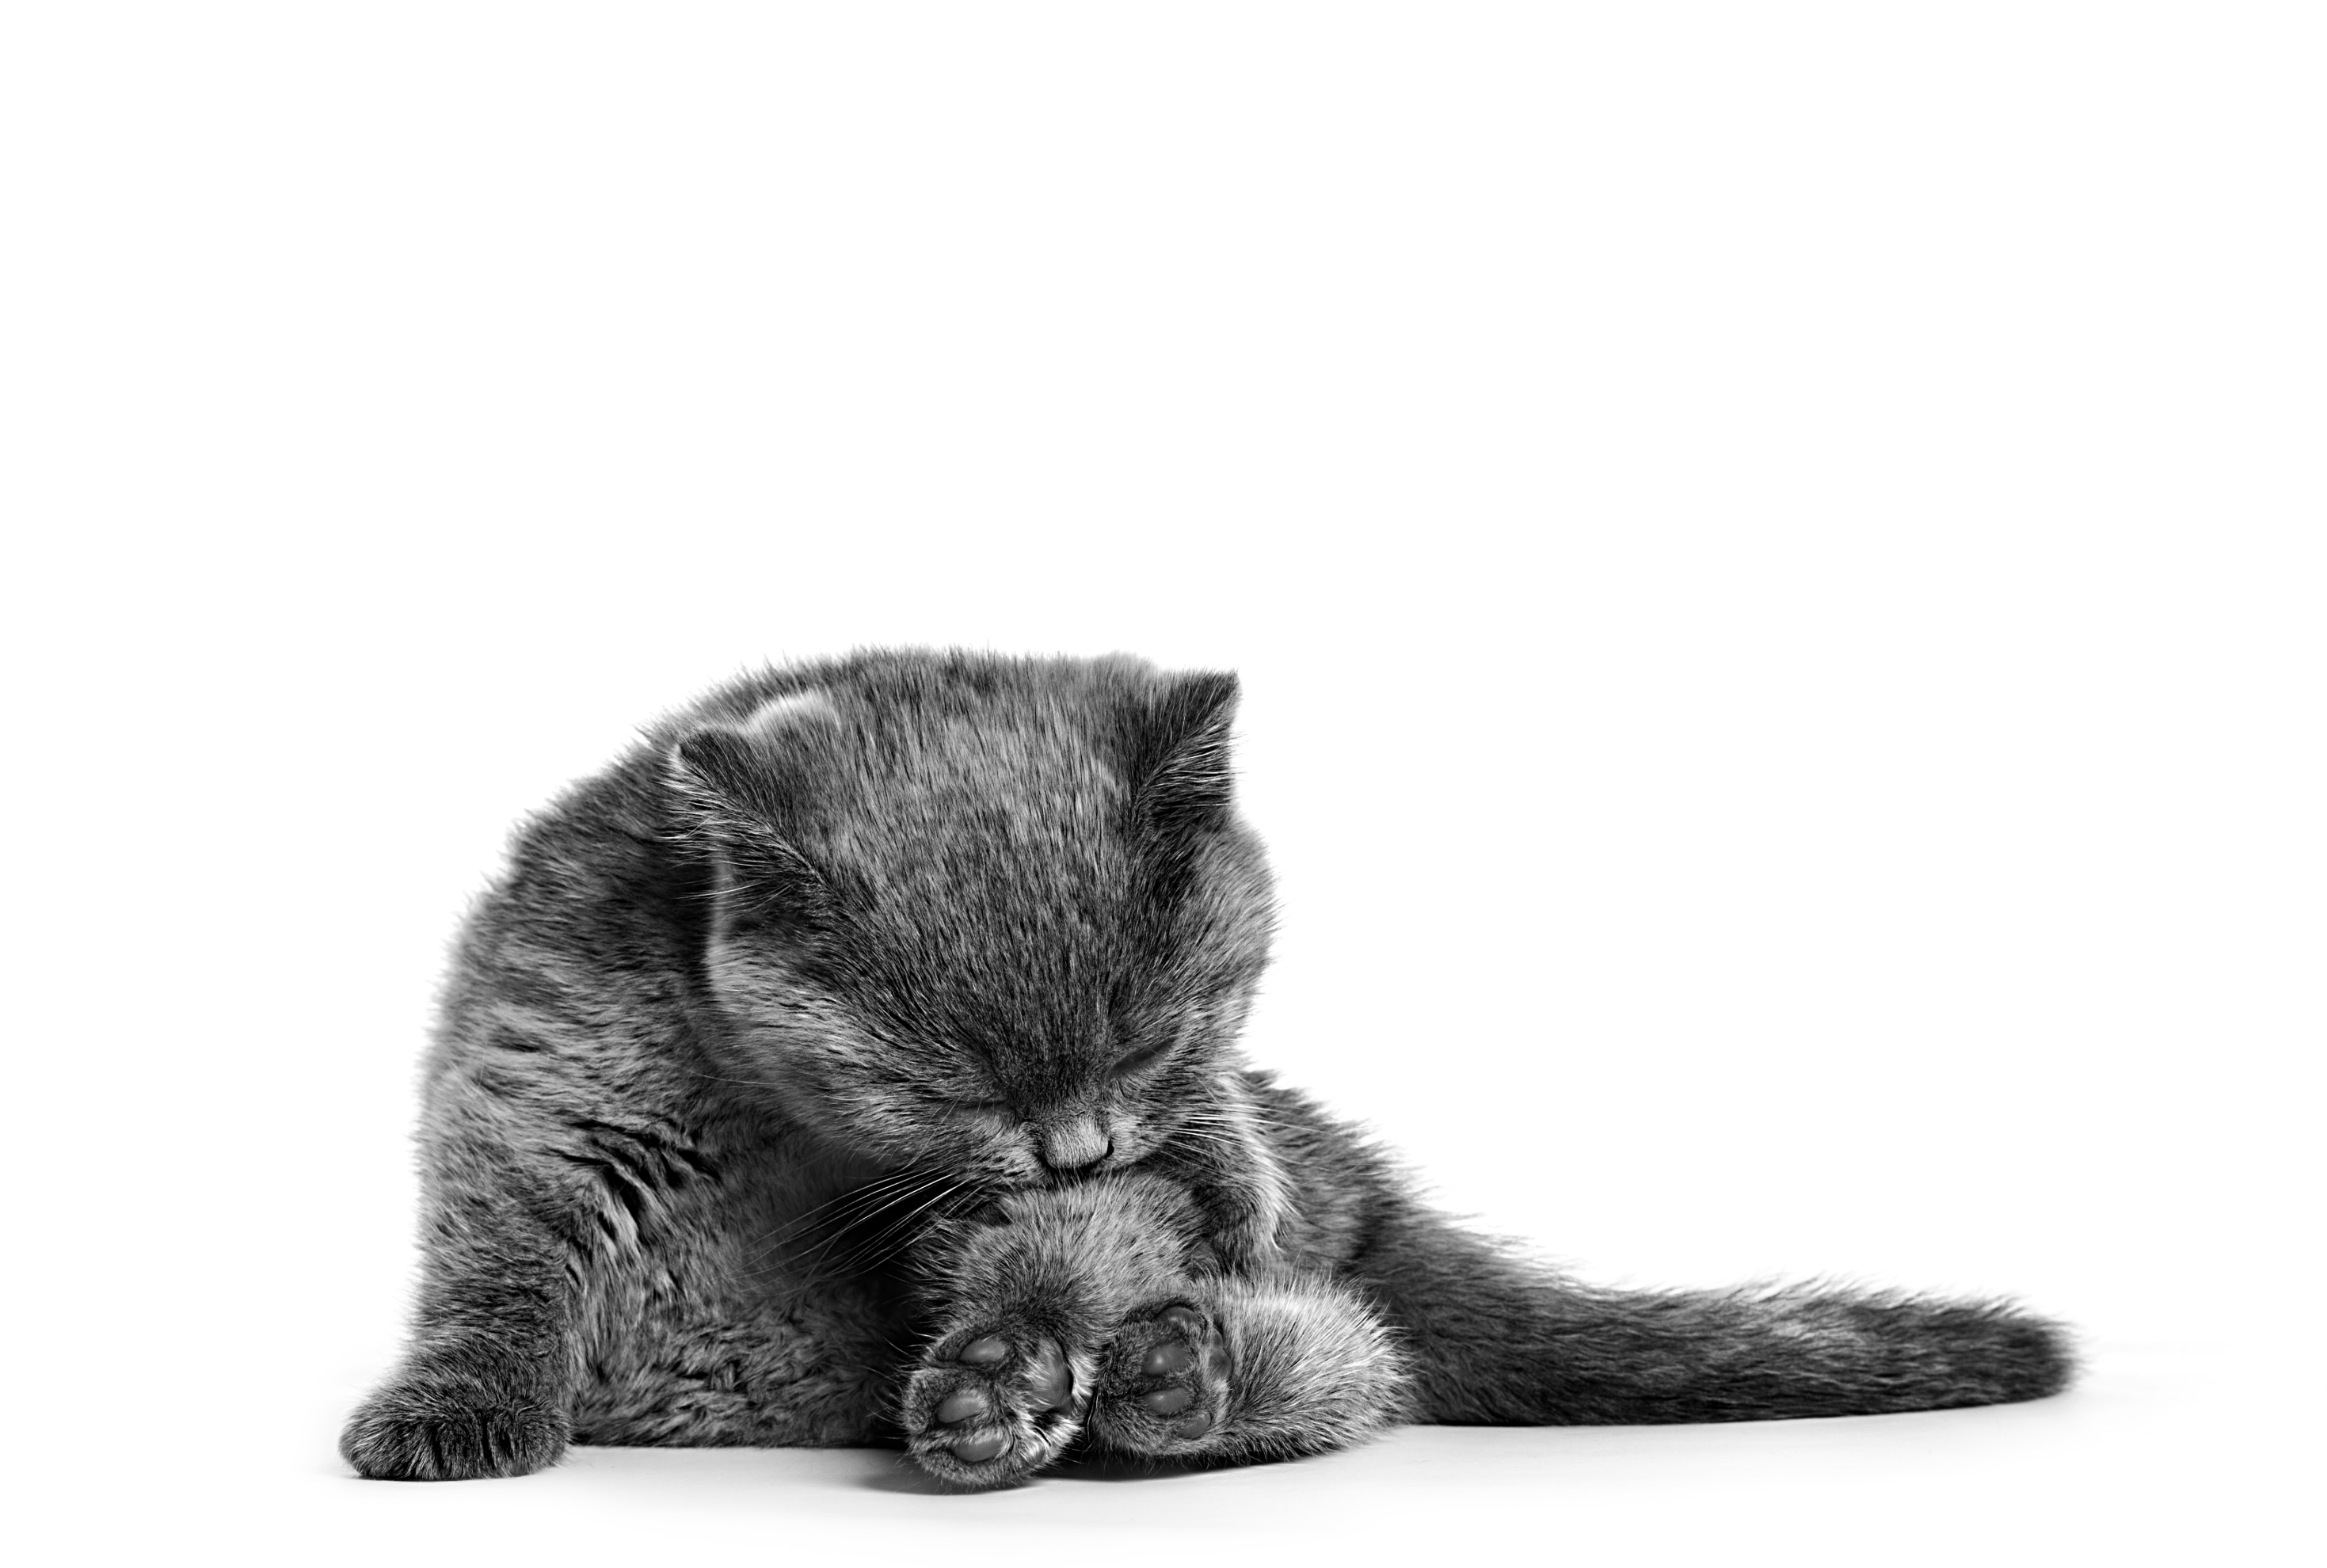 British Shorthair kitten grooming itself in black and white